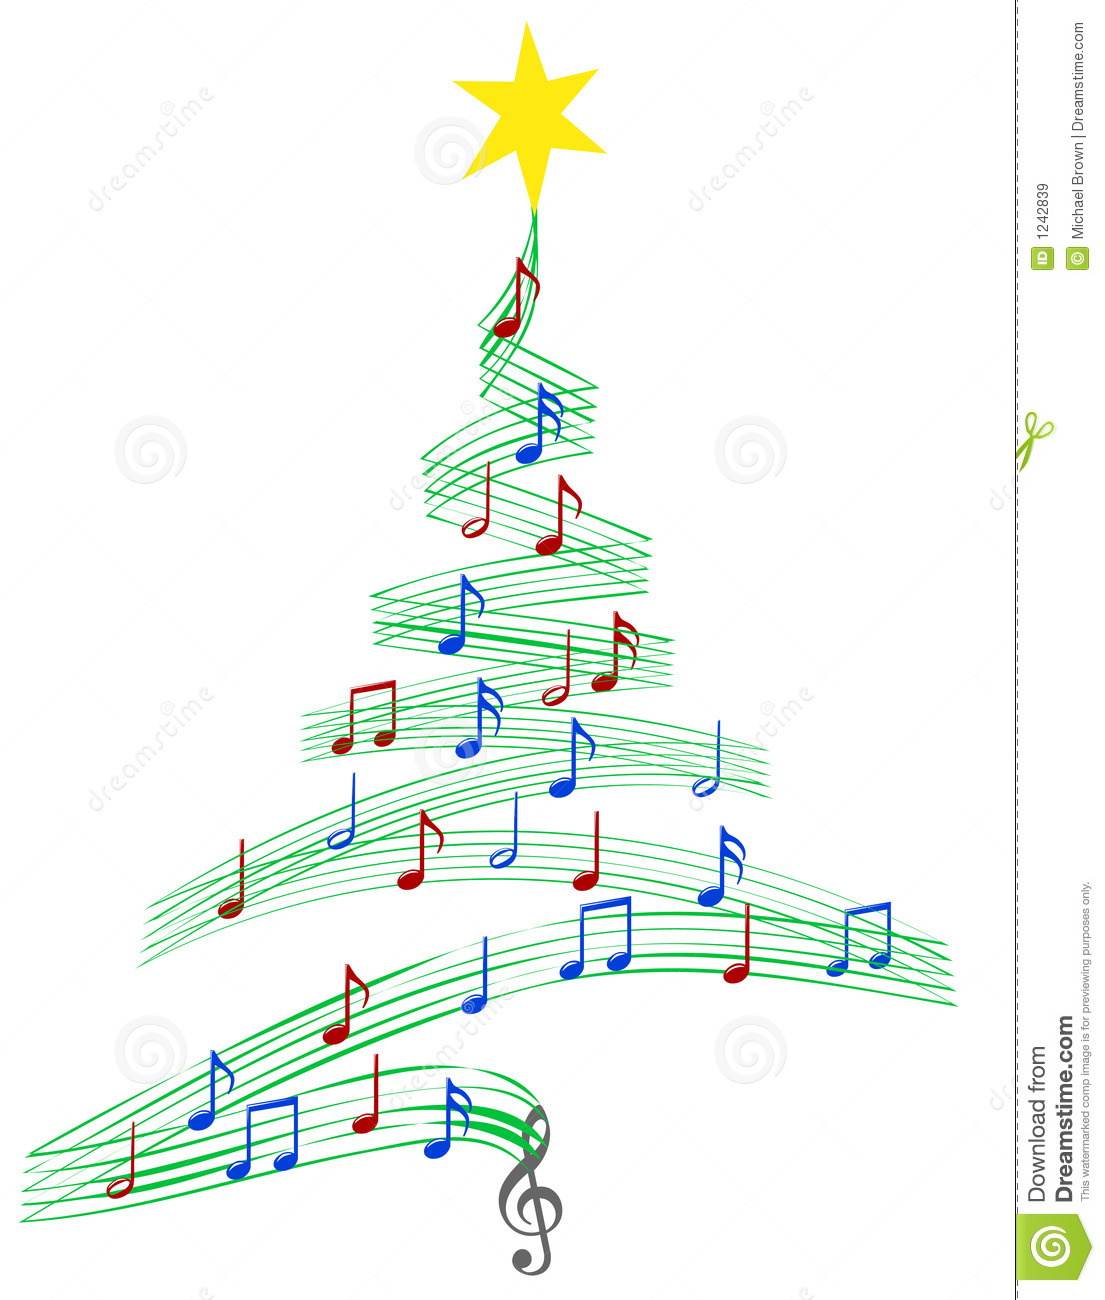 Musical Notes Symbolizing Christmas Carols And Other Christmas Music